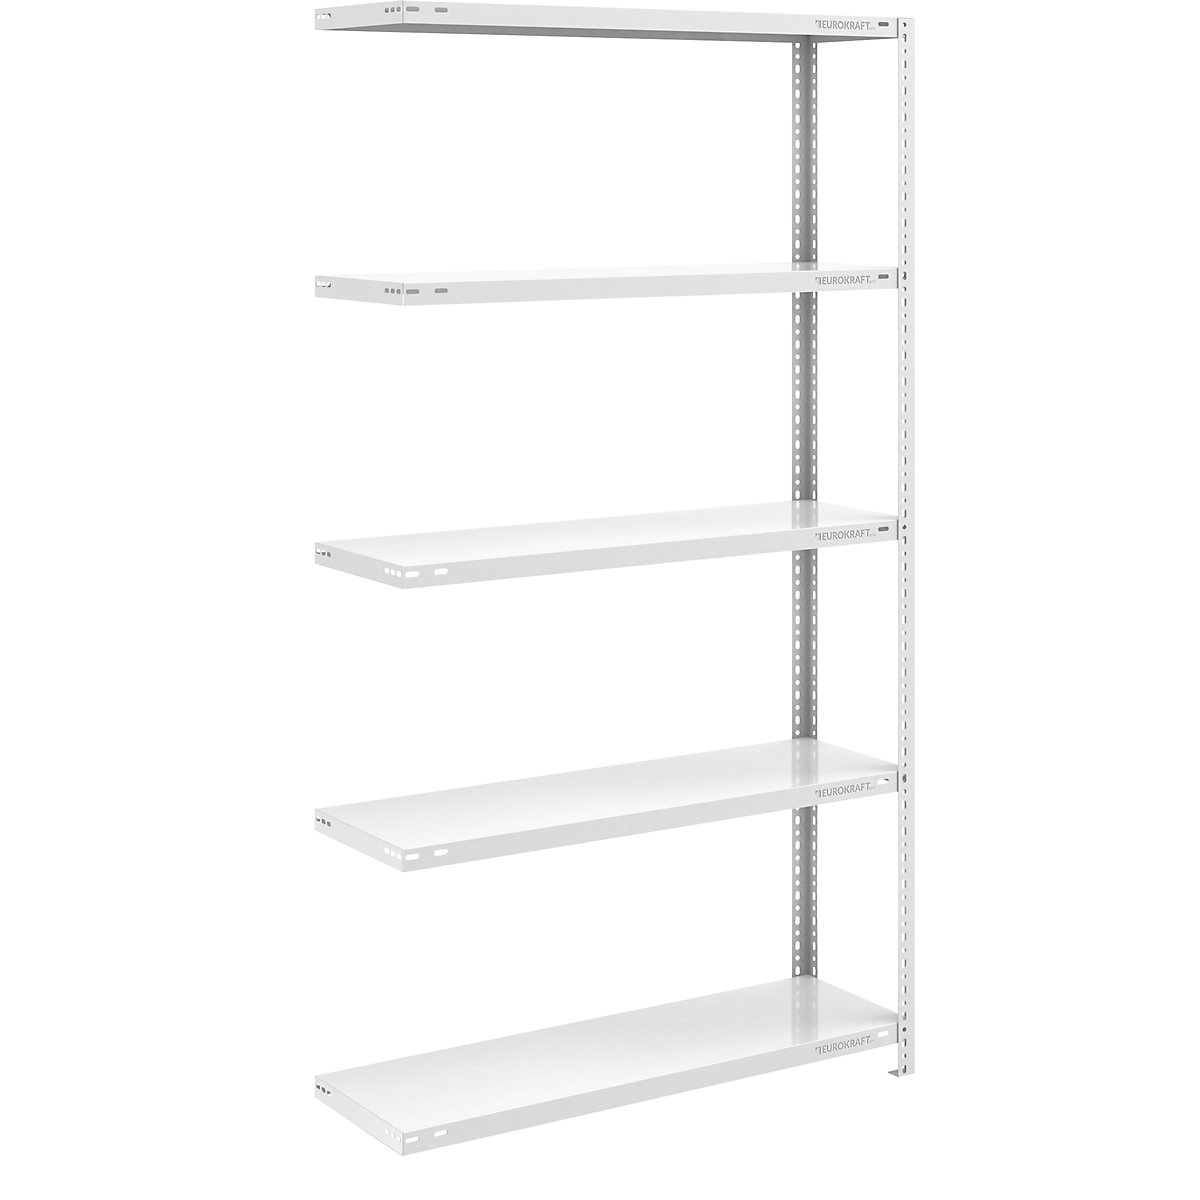 Bolt-together shelf unit, light duty, plastic coated – eurokraft pro, shelf unit height 2000 mm, shelf width 1000 mm, depth 400 mm, extension shelf unit-13